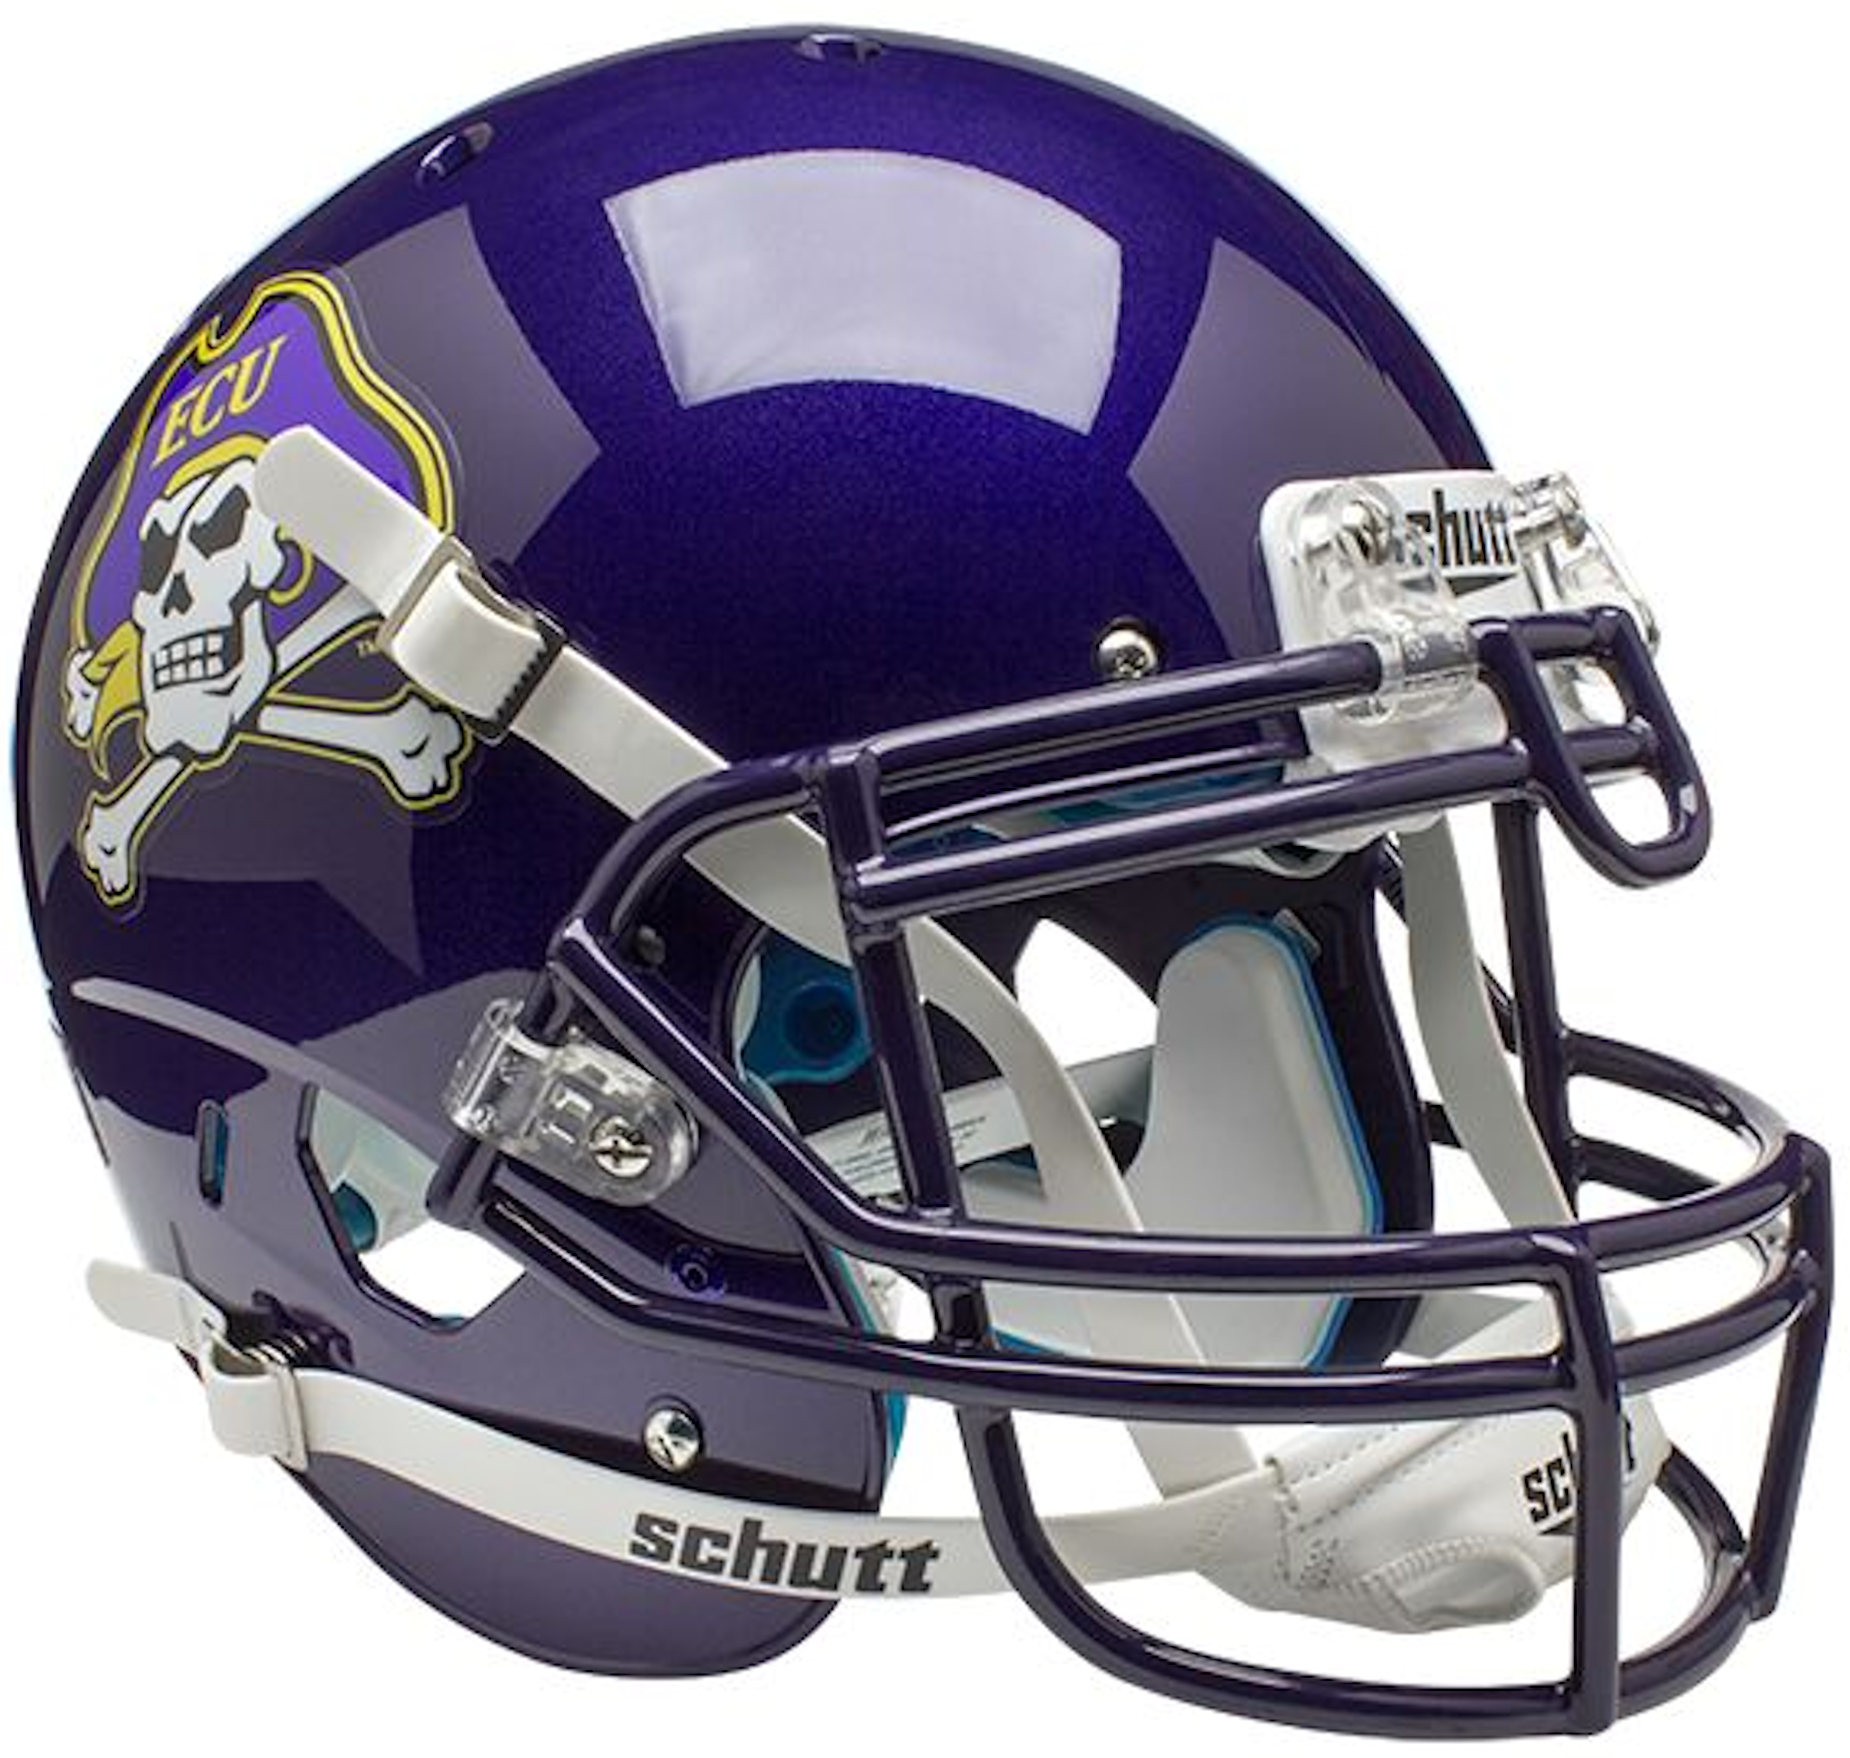 East Carolina Pirates Authentic College XP Football Helmet Schutt <B>Purple Mask</B>